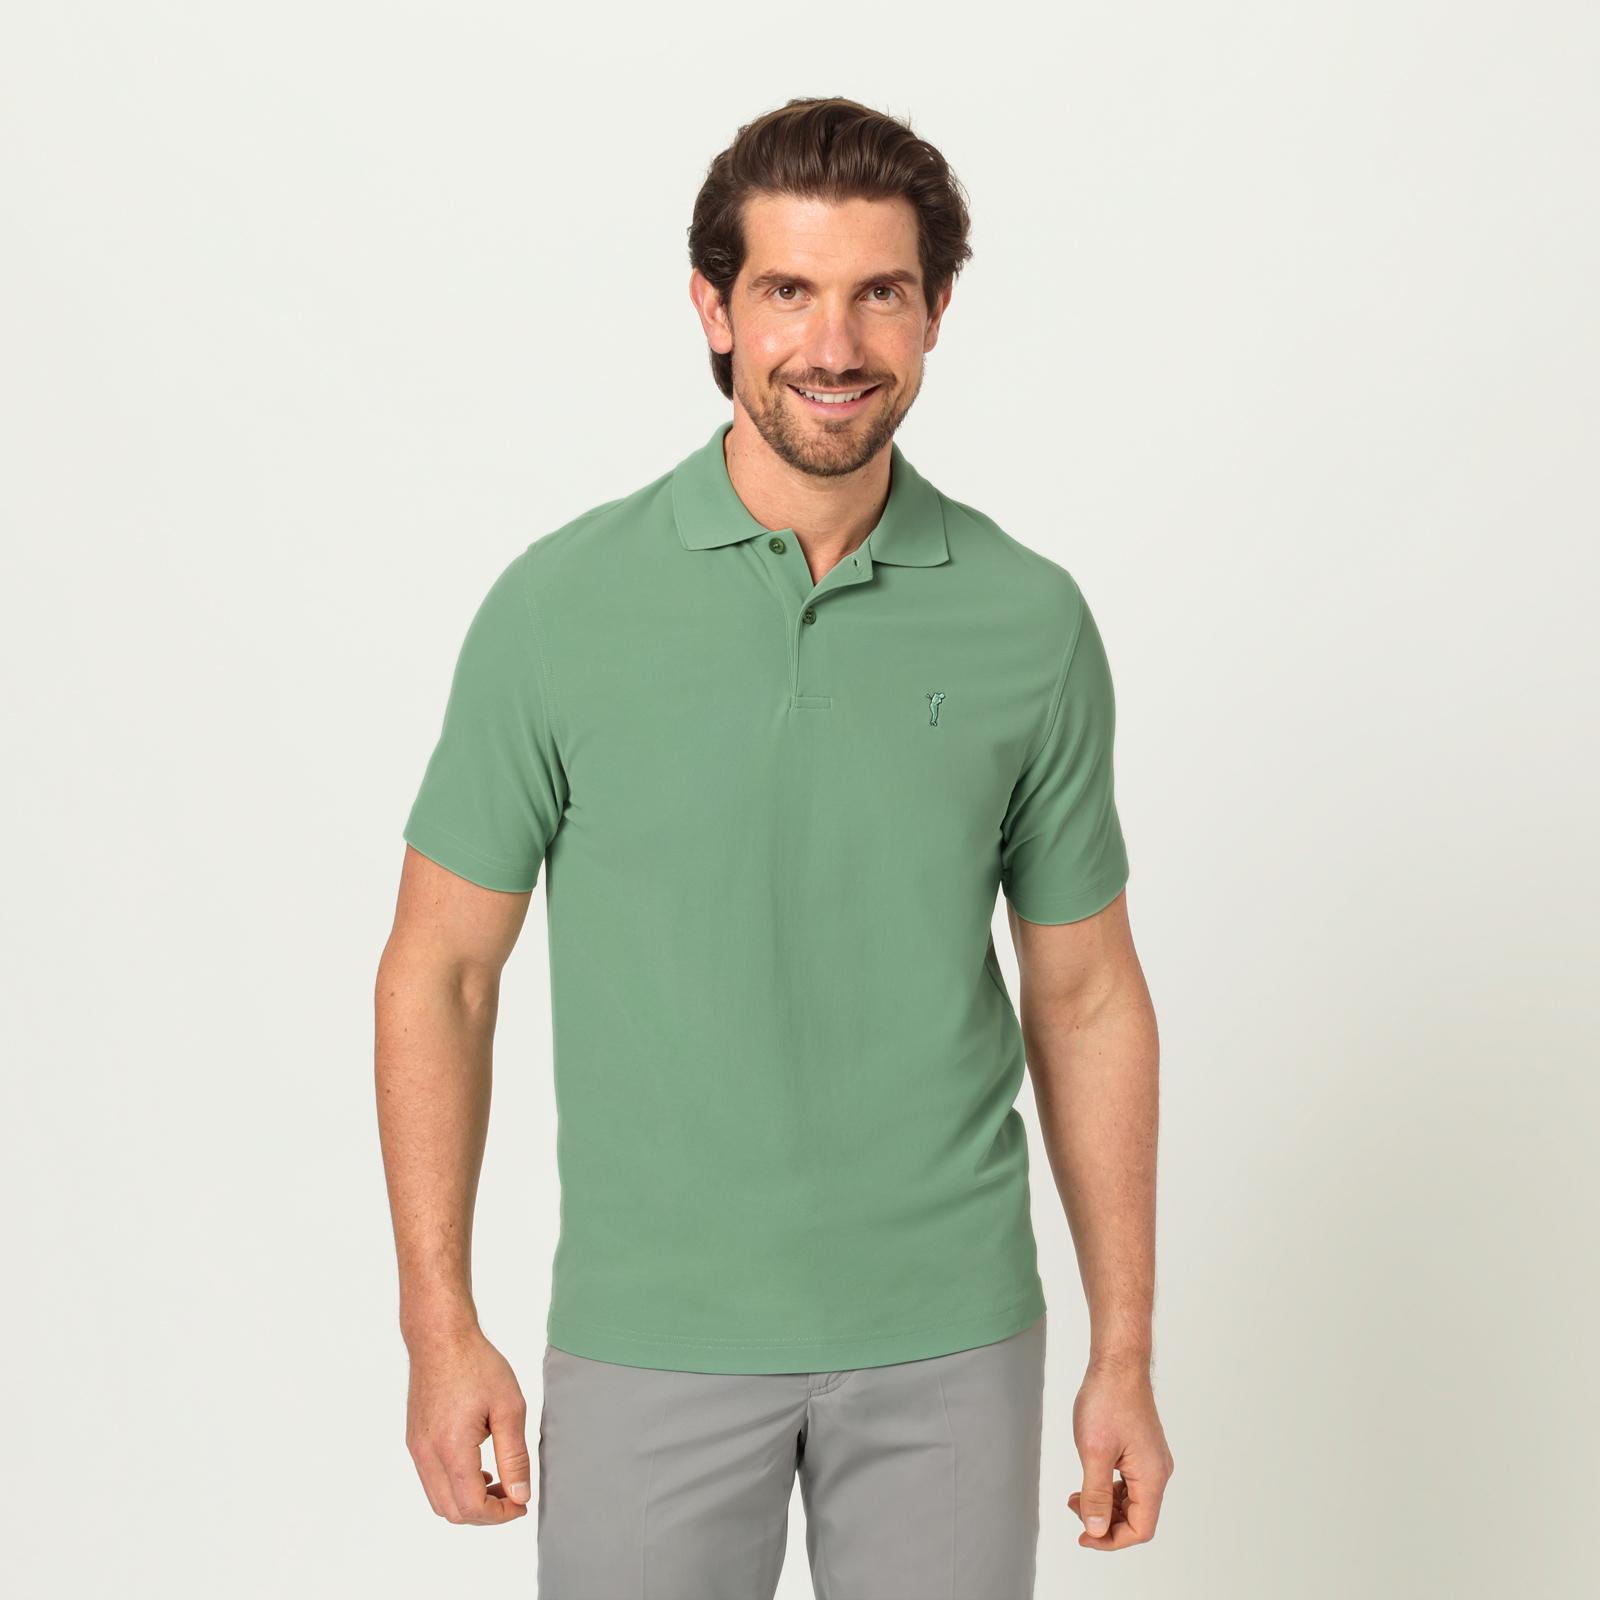 Men's polo shirt made from moisture-regulating material